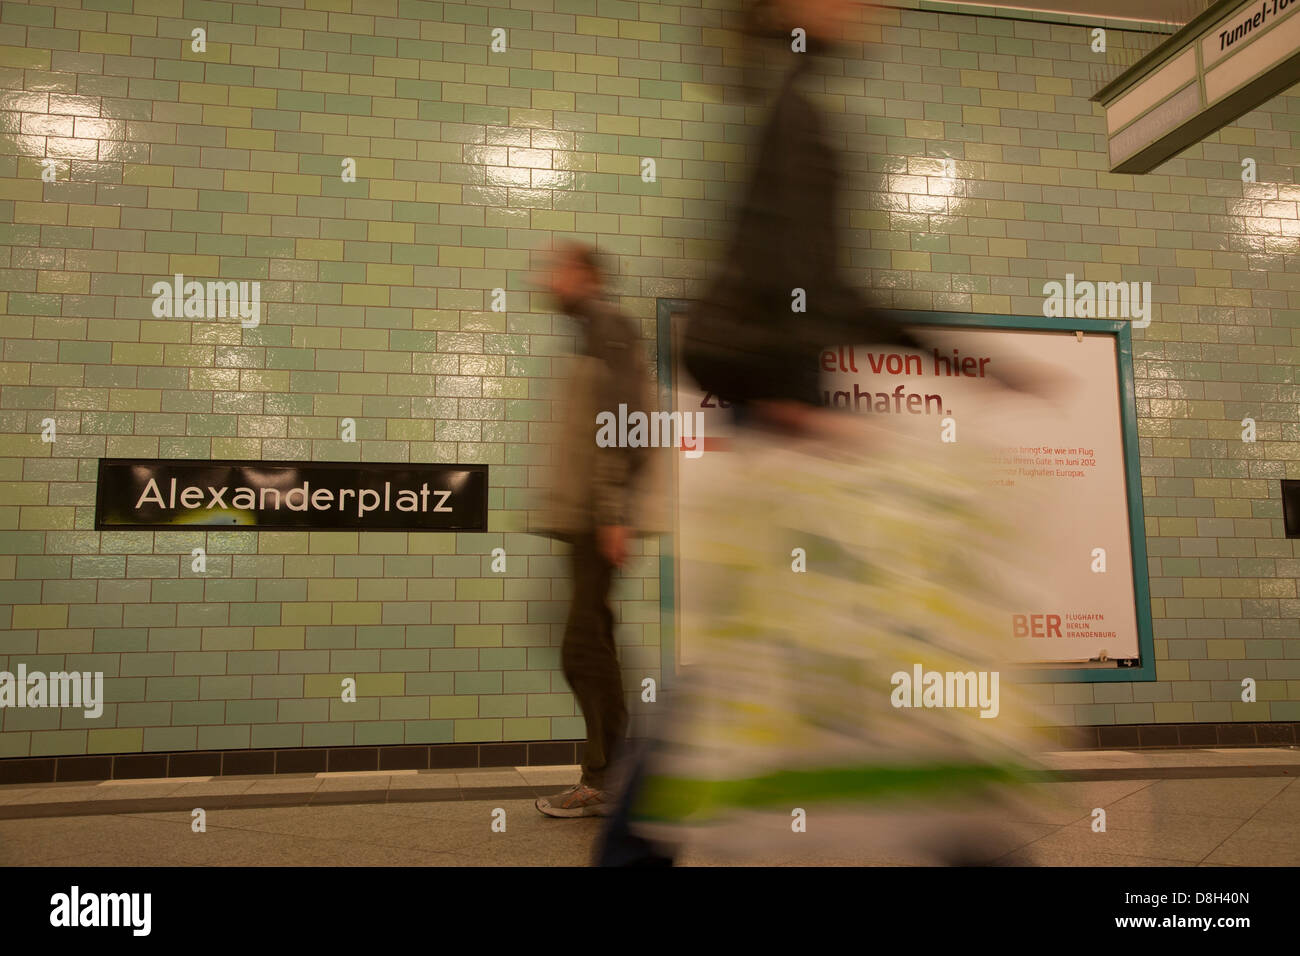 Alexanderplatz Underground Station, Berlin, Germany Stock Photo